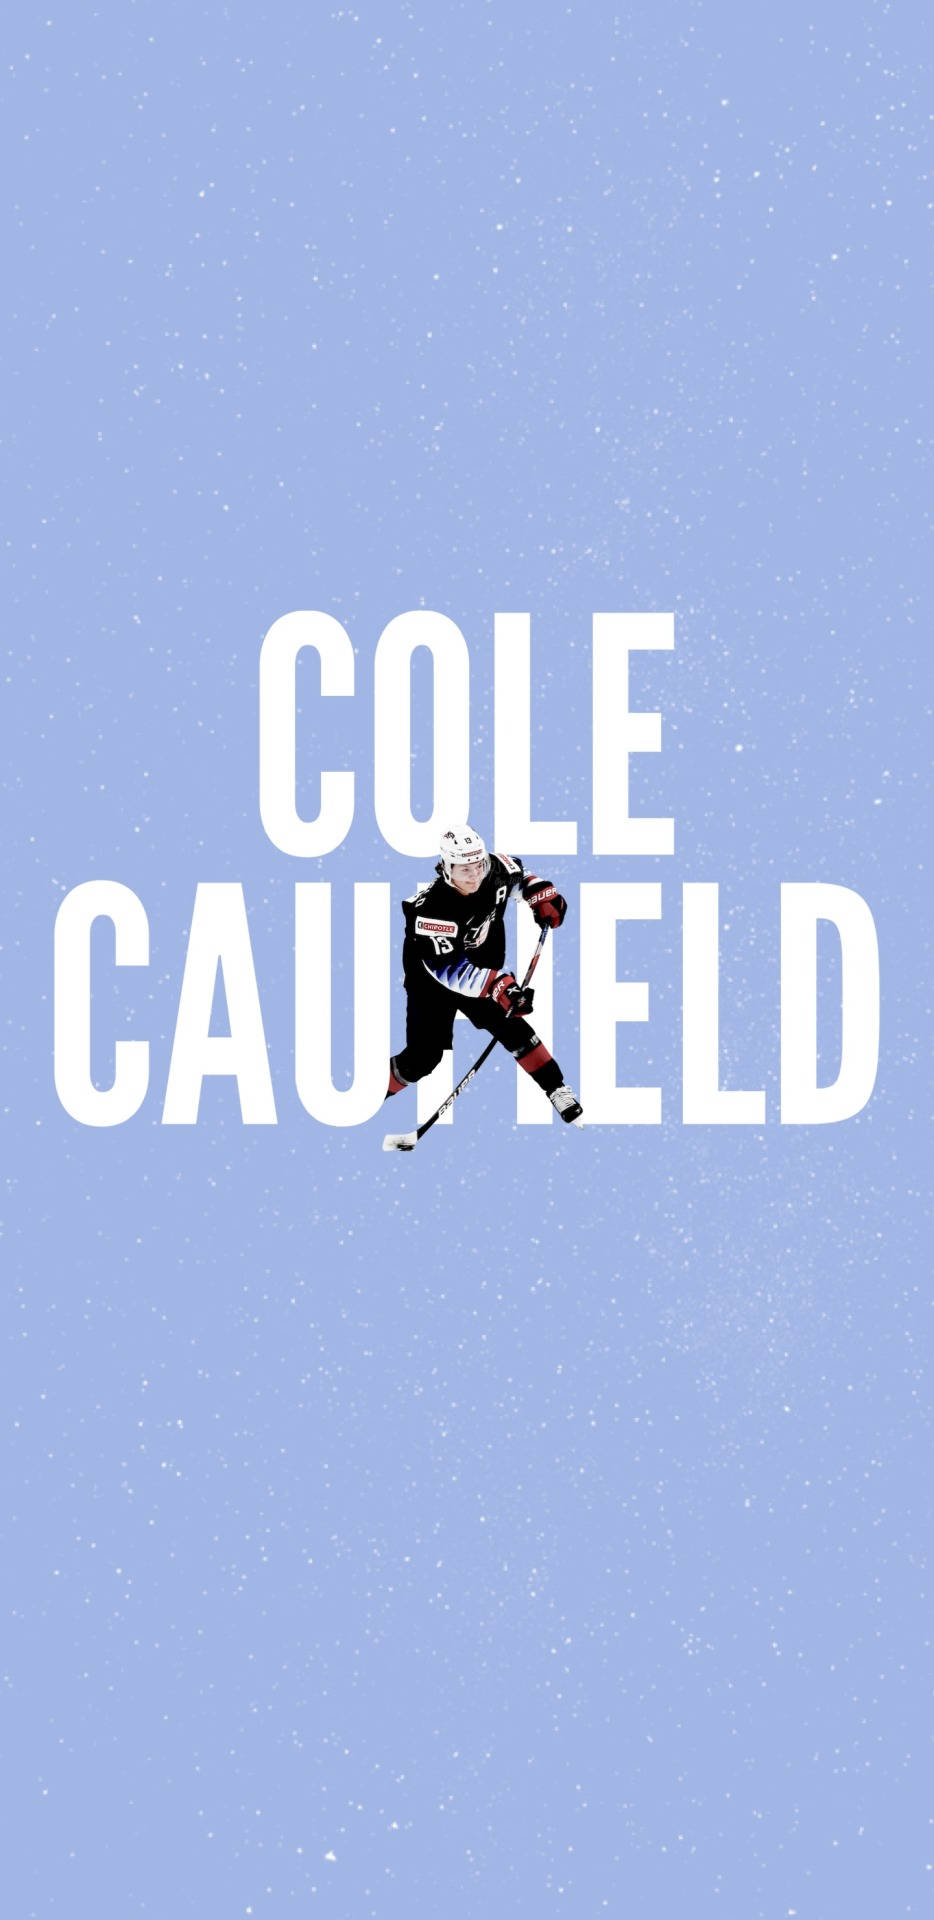 Cole Caufield Sports Athlete Name Art Wallpaper